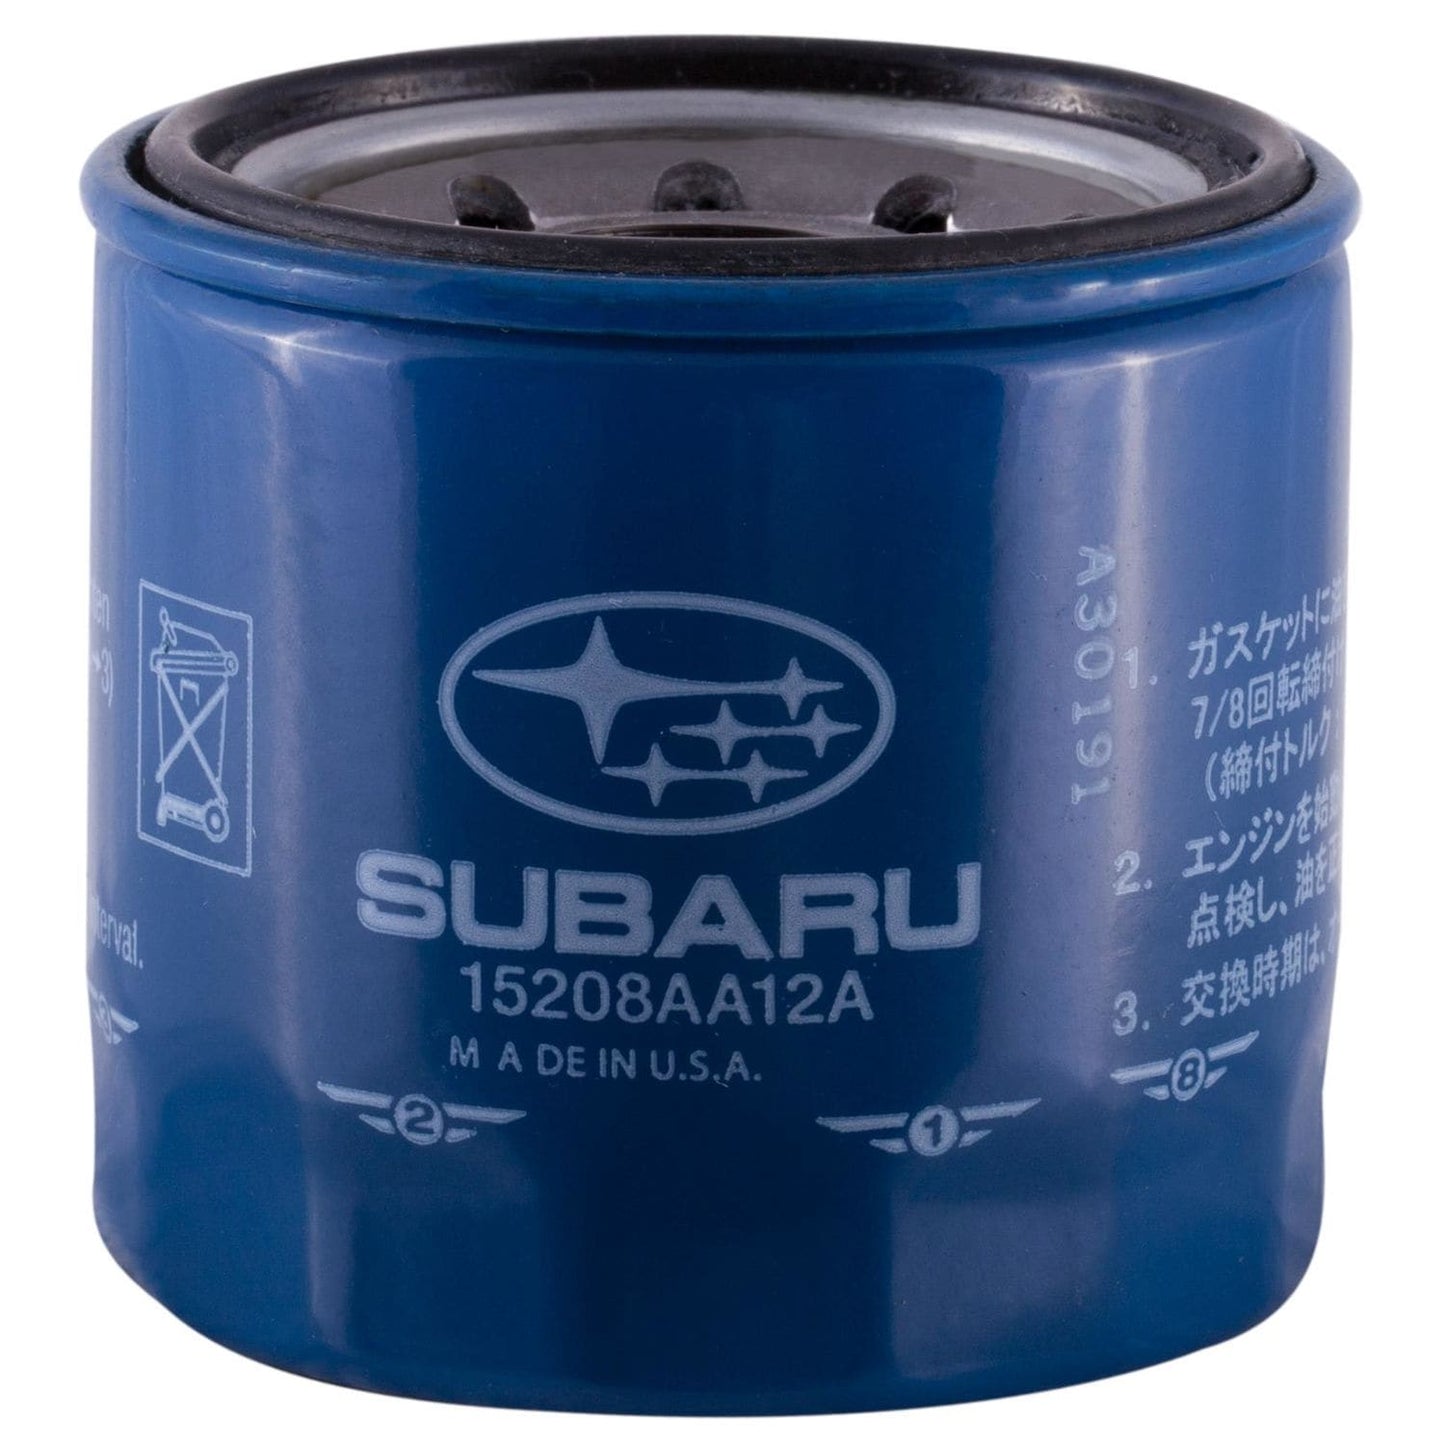 Subaru Oil Filter - 15208AA12A